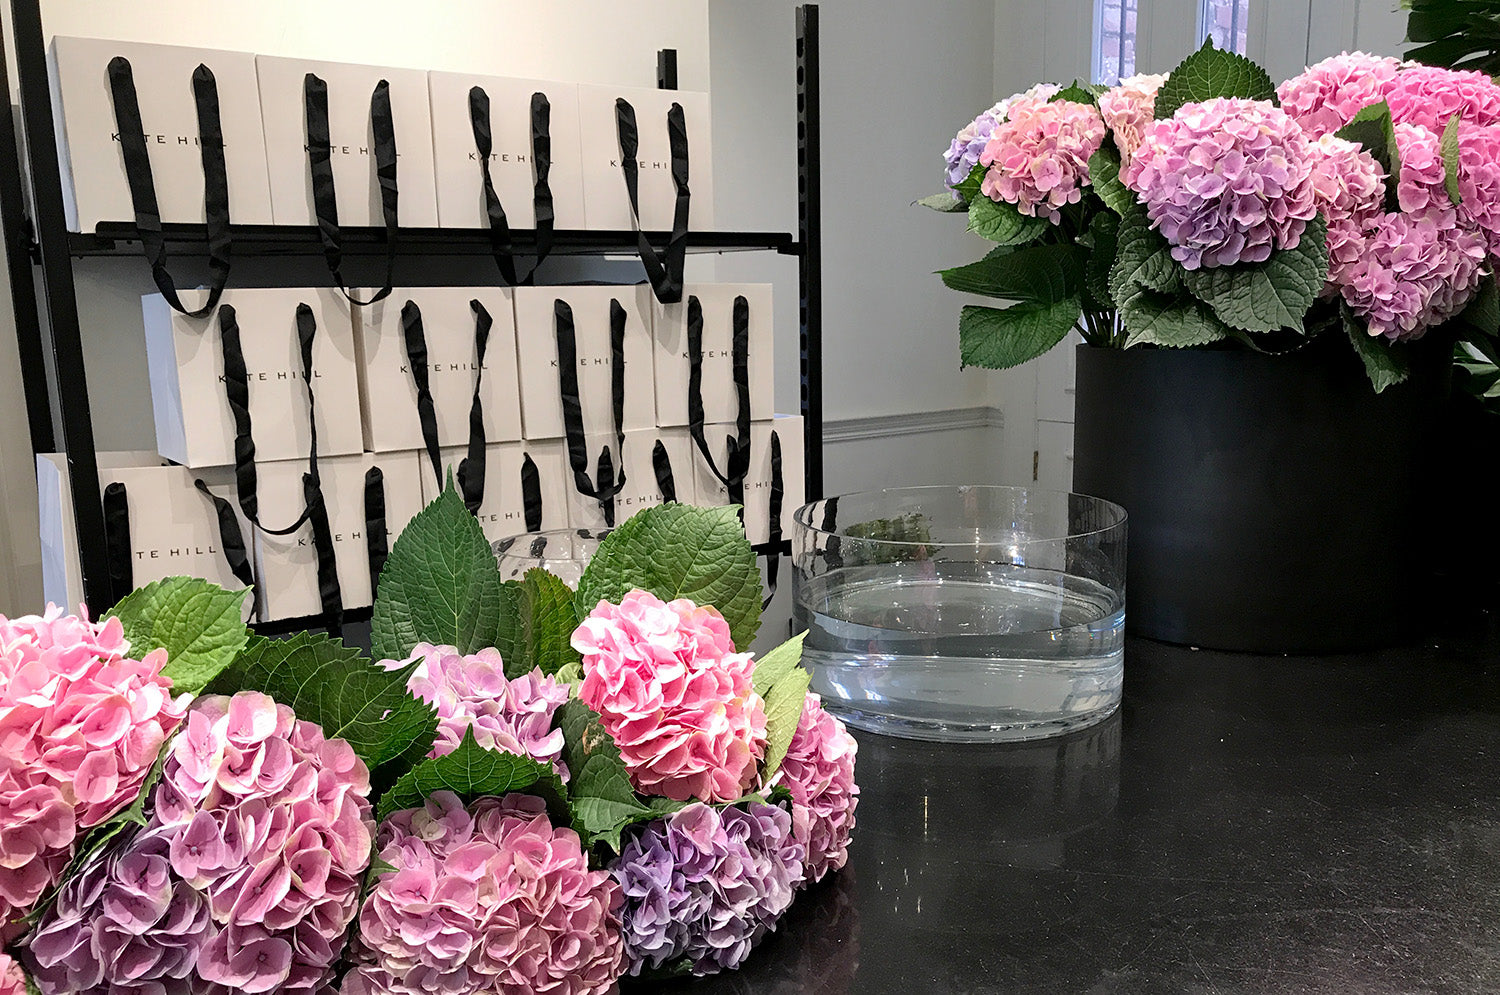 Melbourne florist displaying hydrangea flowers